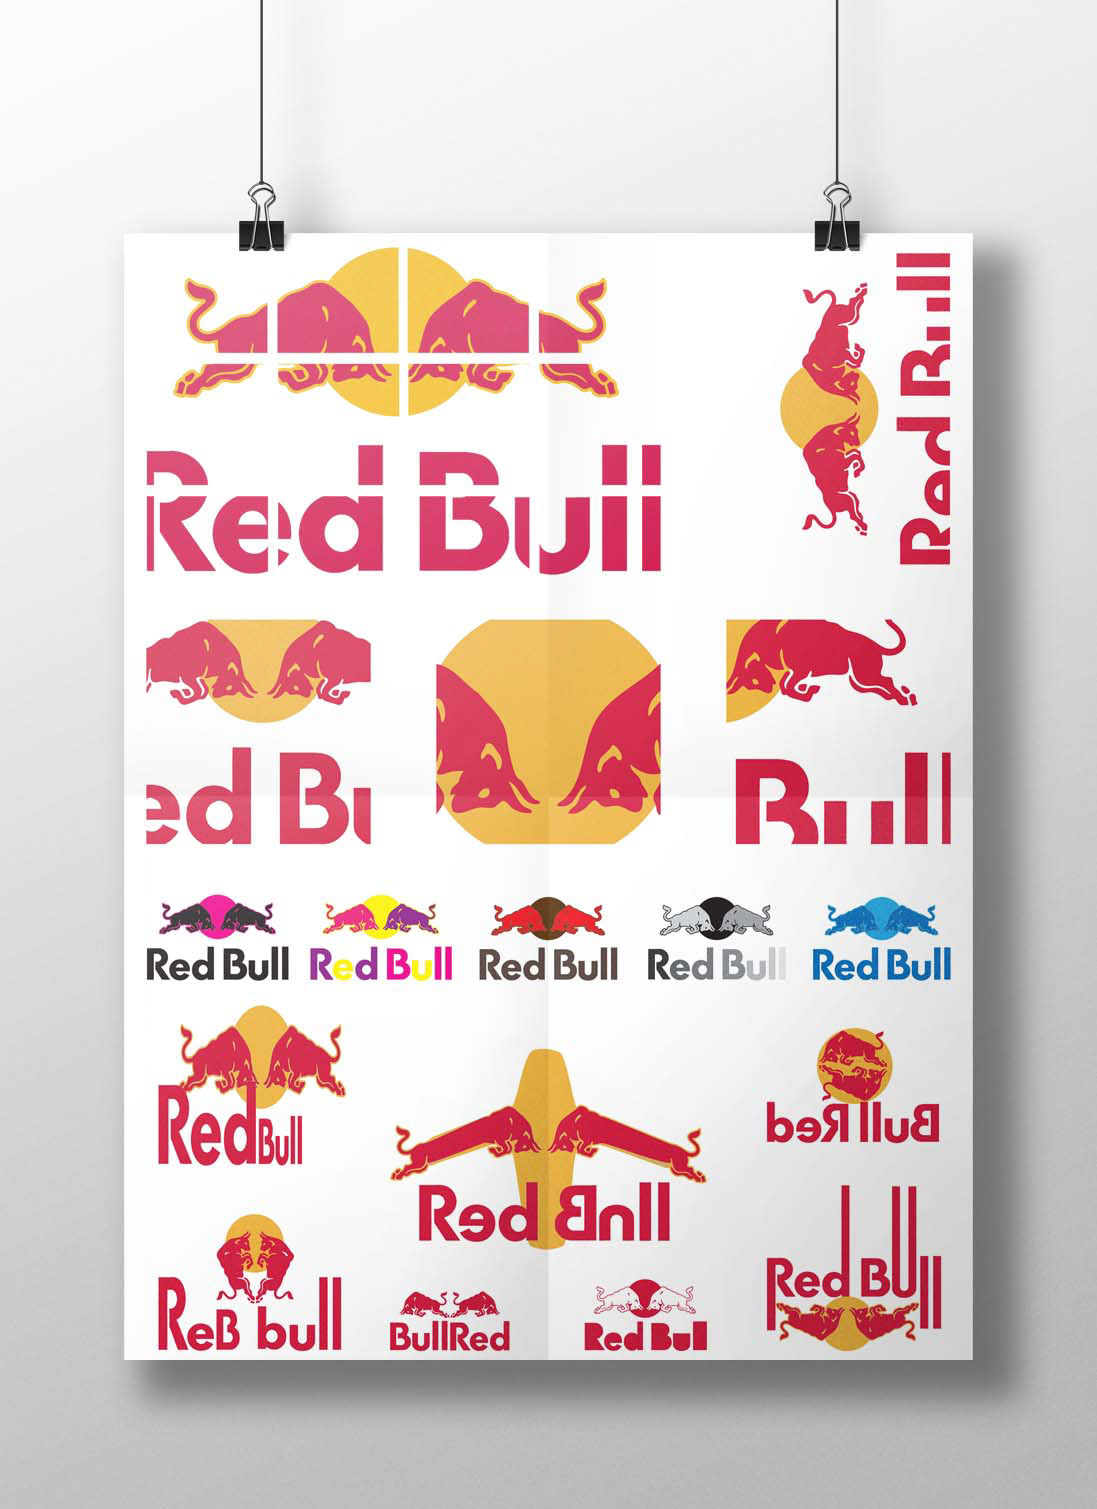 subvertising Porsche RedBull absolut Vodka poster design advertise communication visual iade